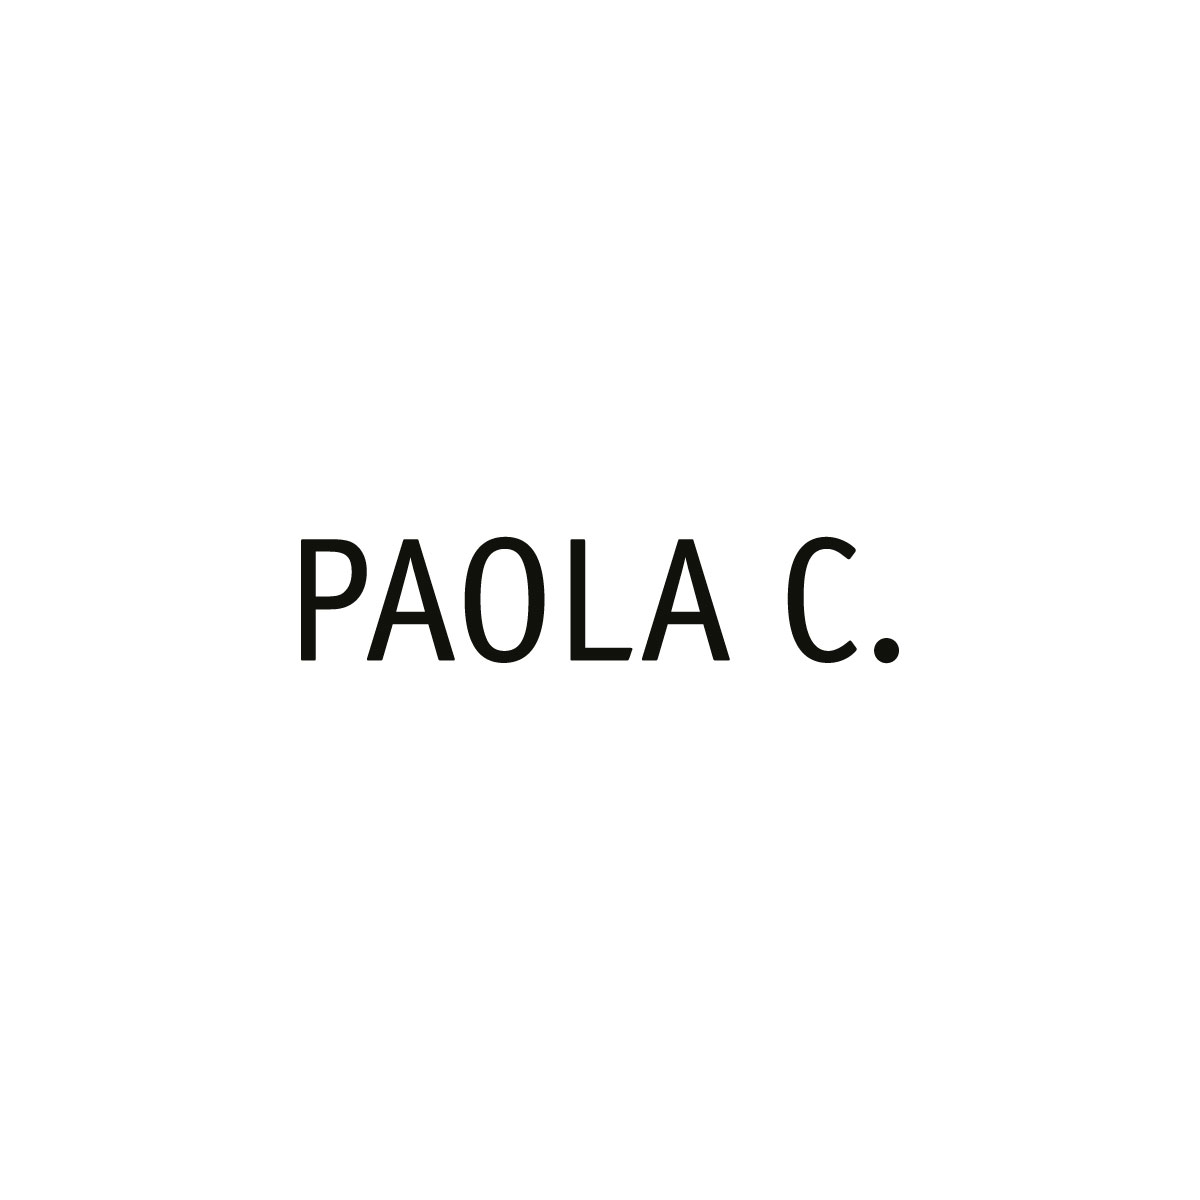 Paola C